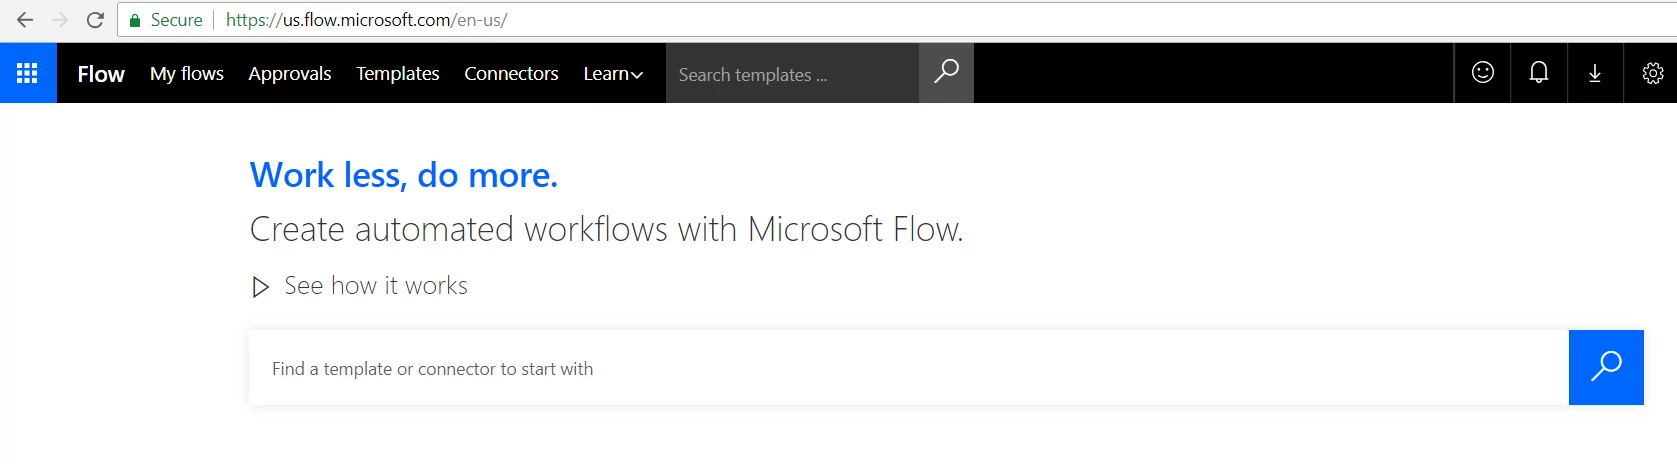 Login to Microsoft flow